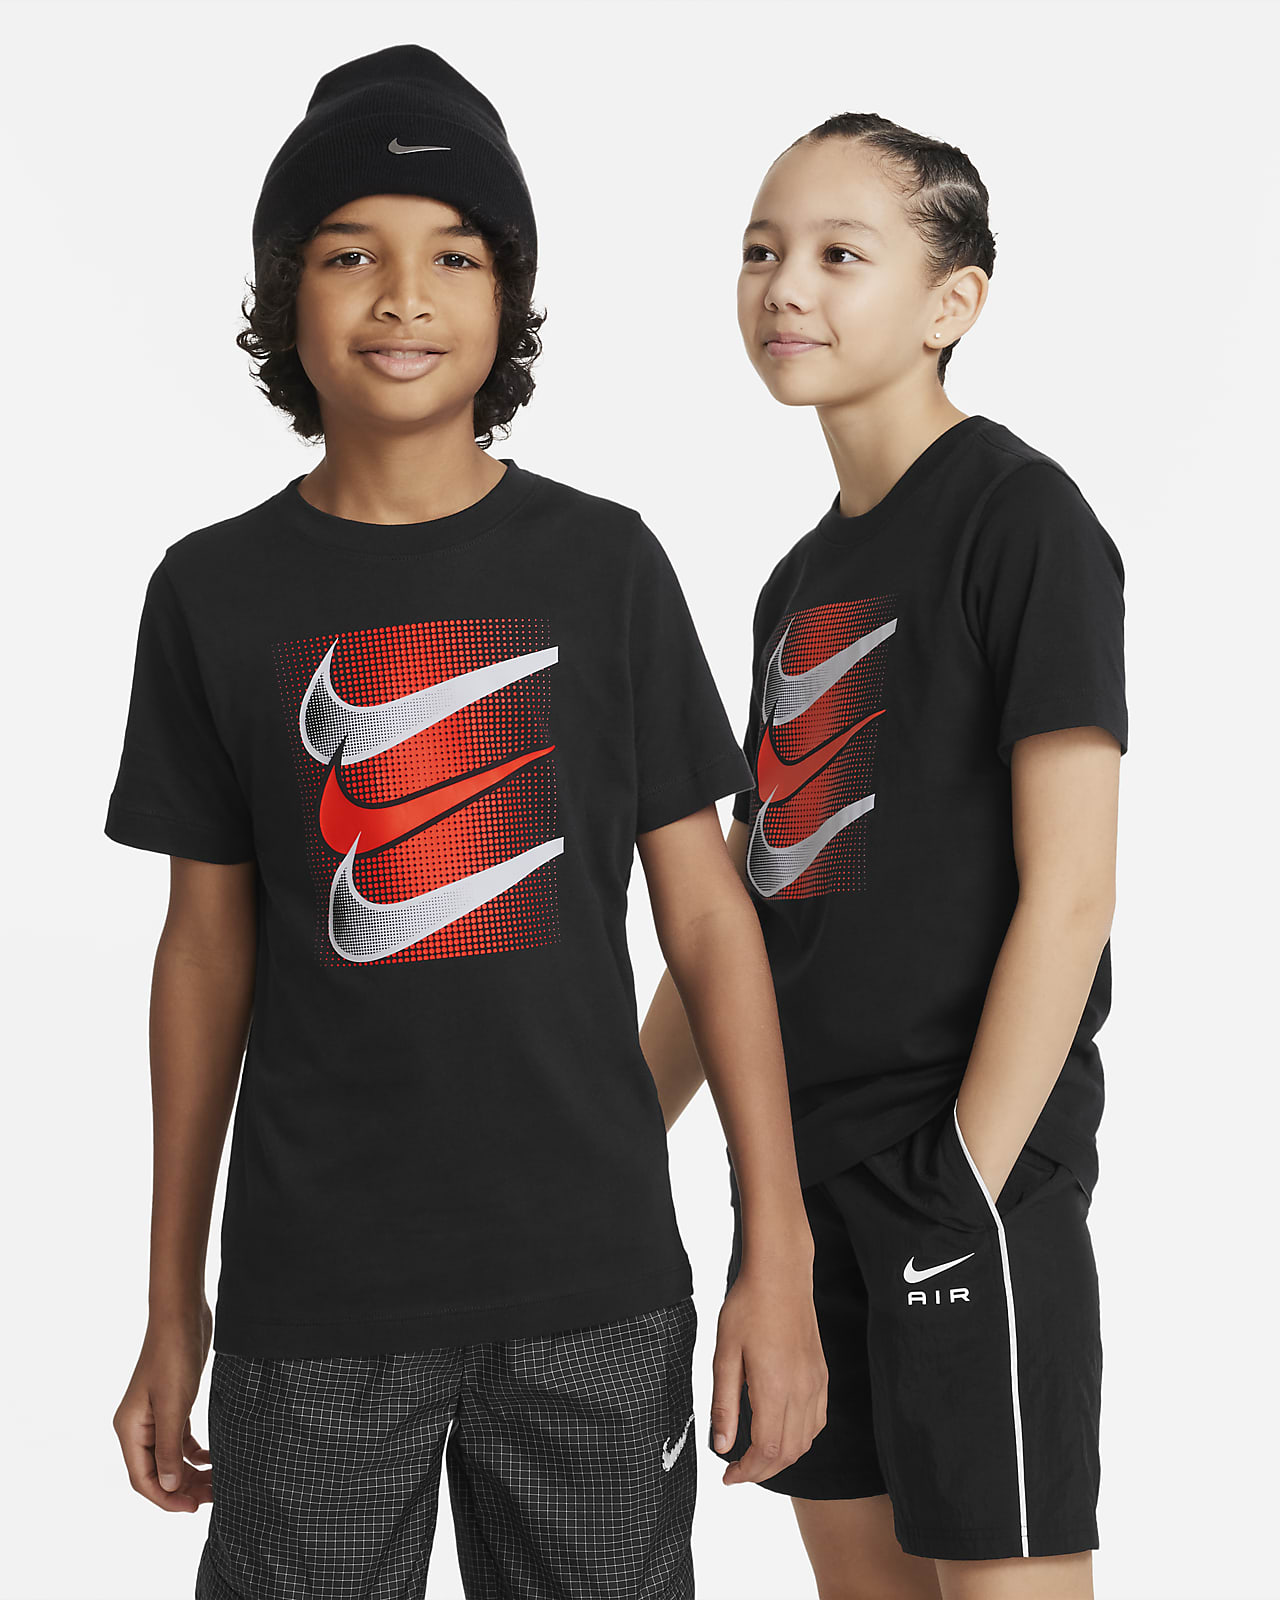 T-shirt Nike Sportswear – Ragazzi